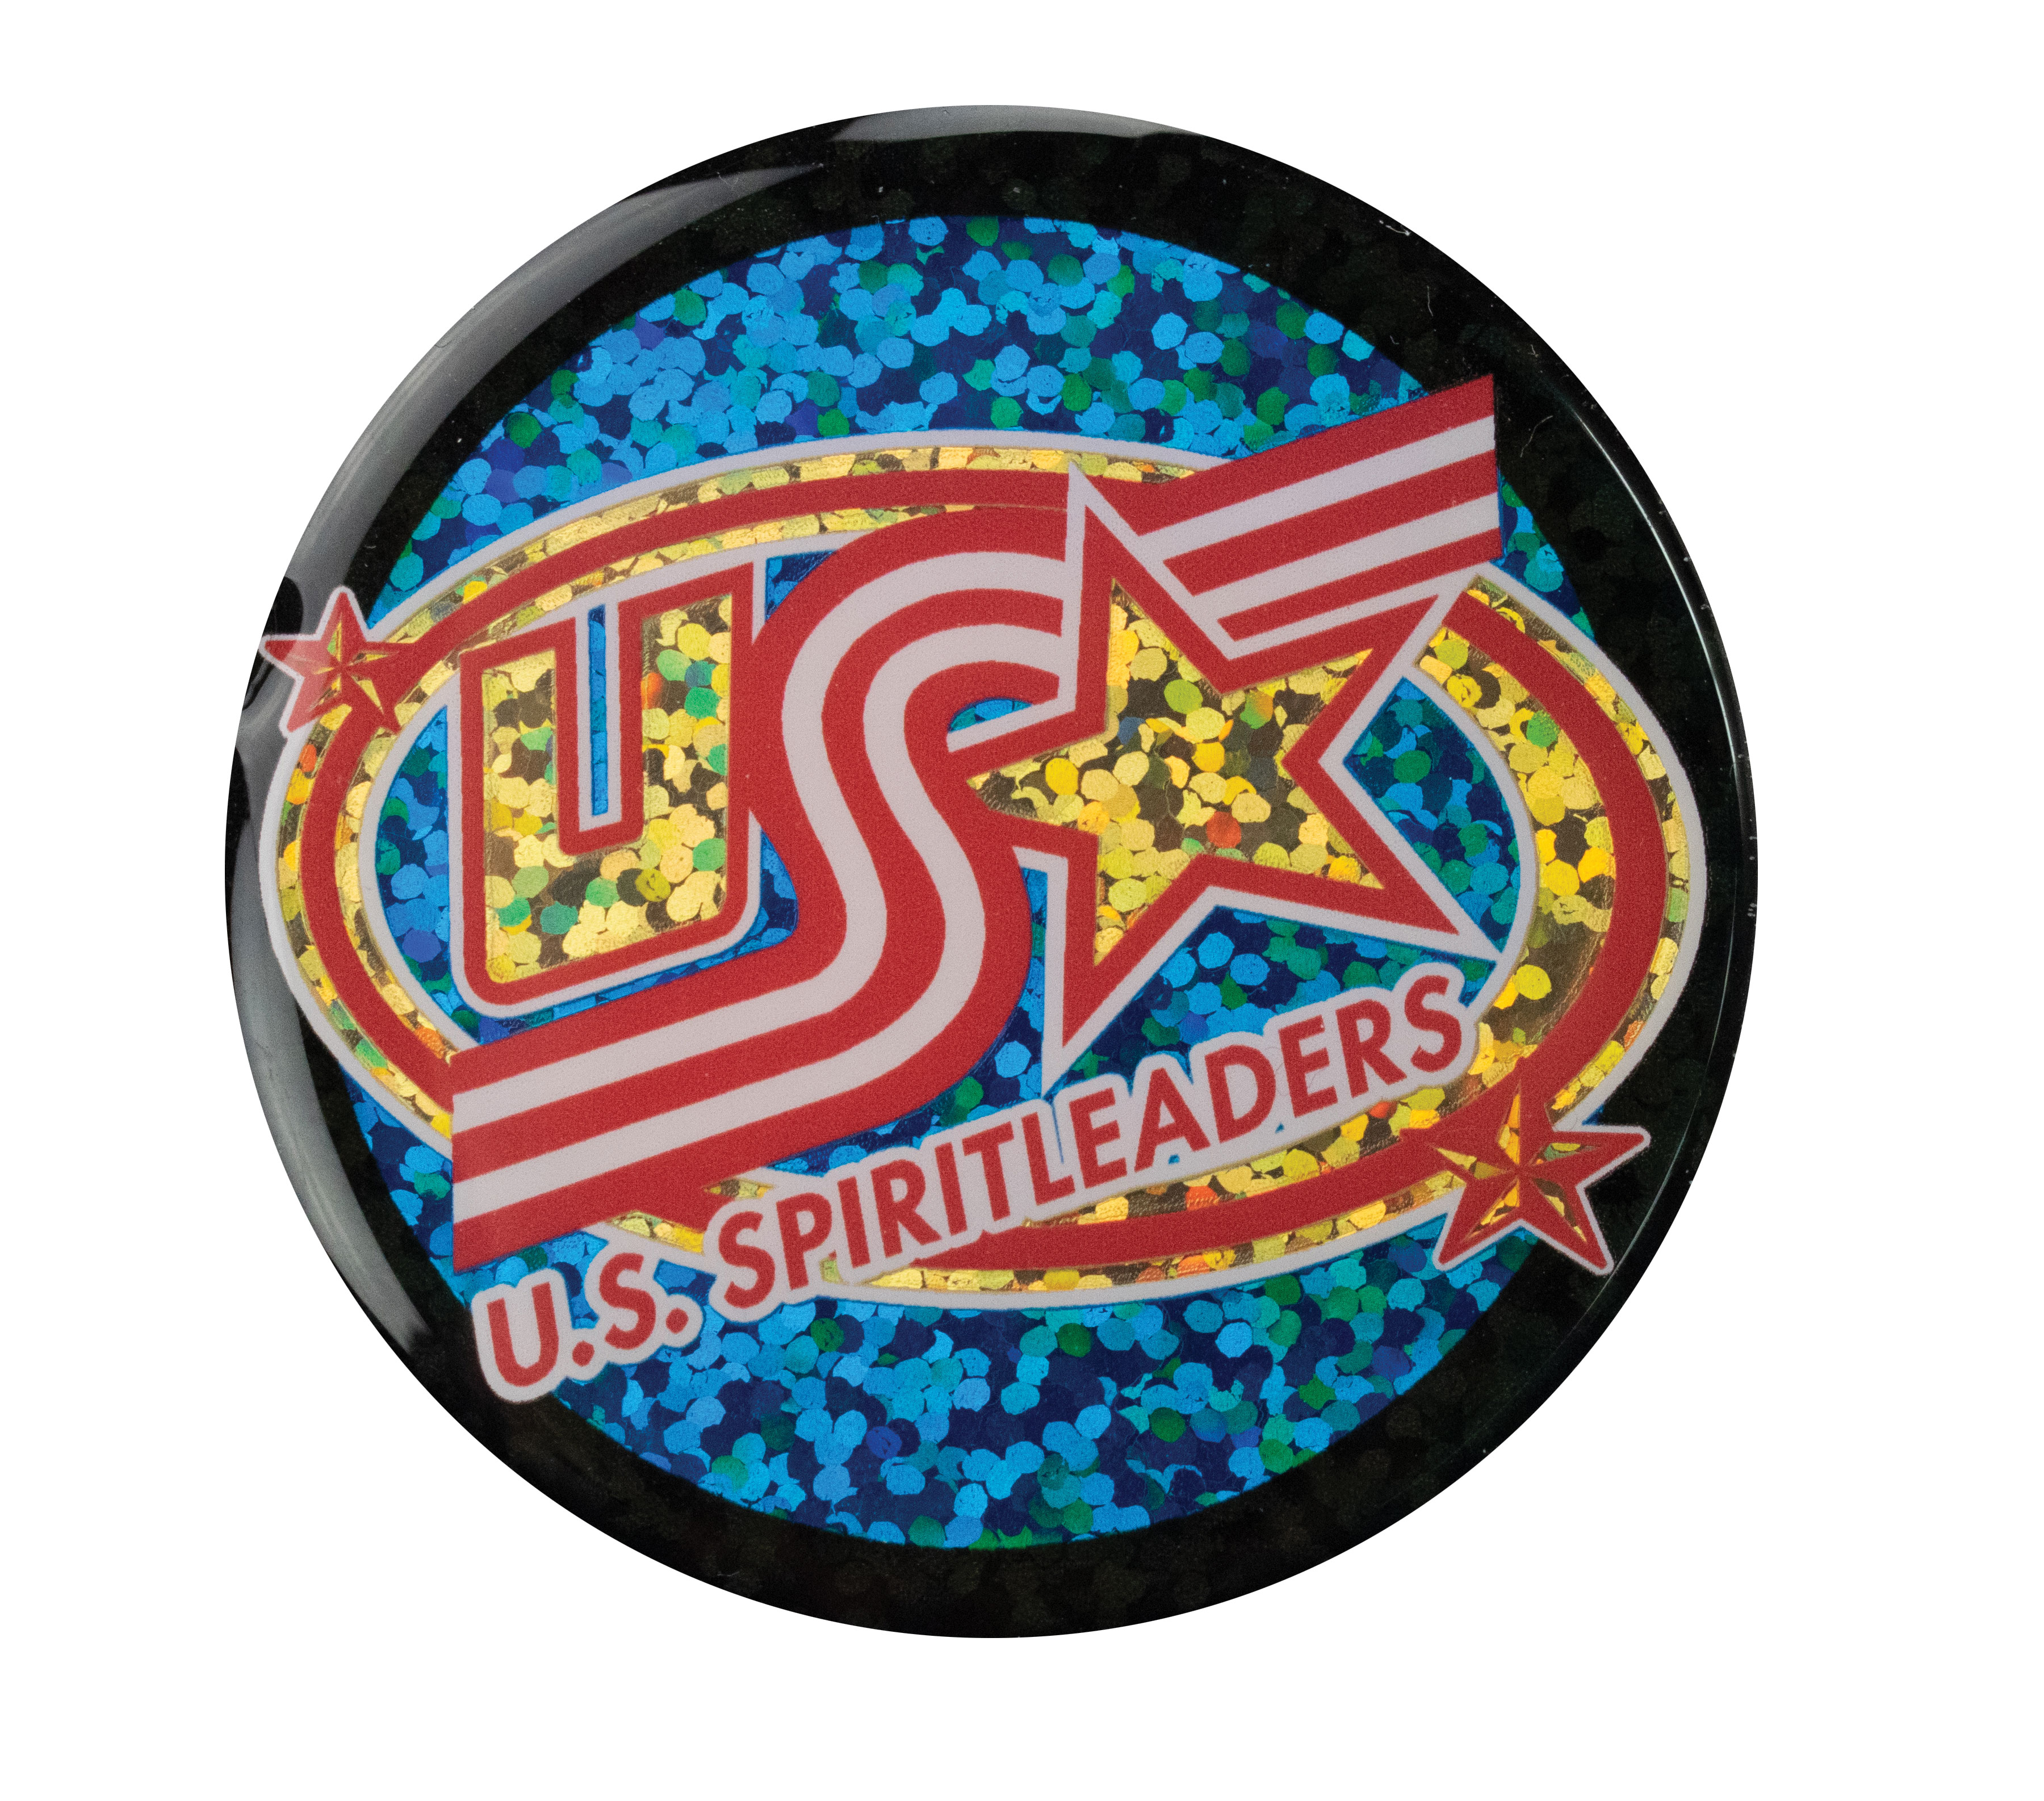 sparkle-label_usa-spirit-leaders